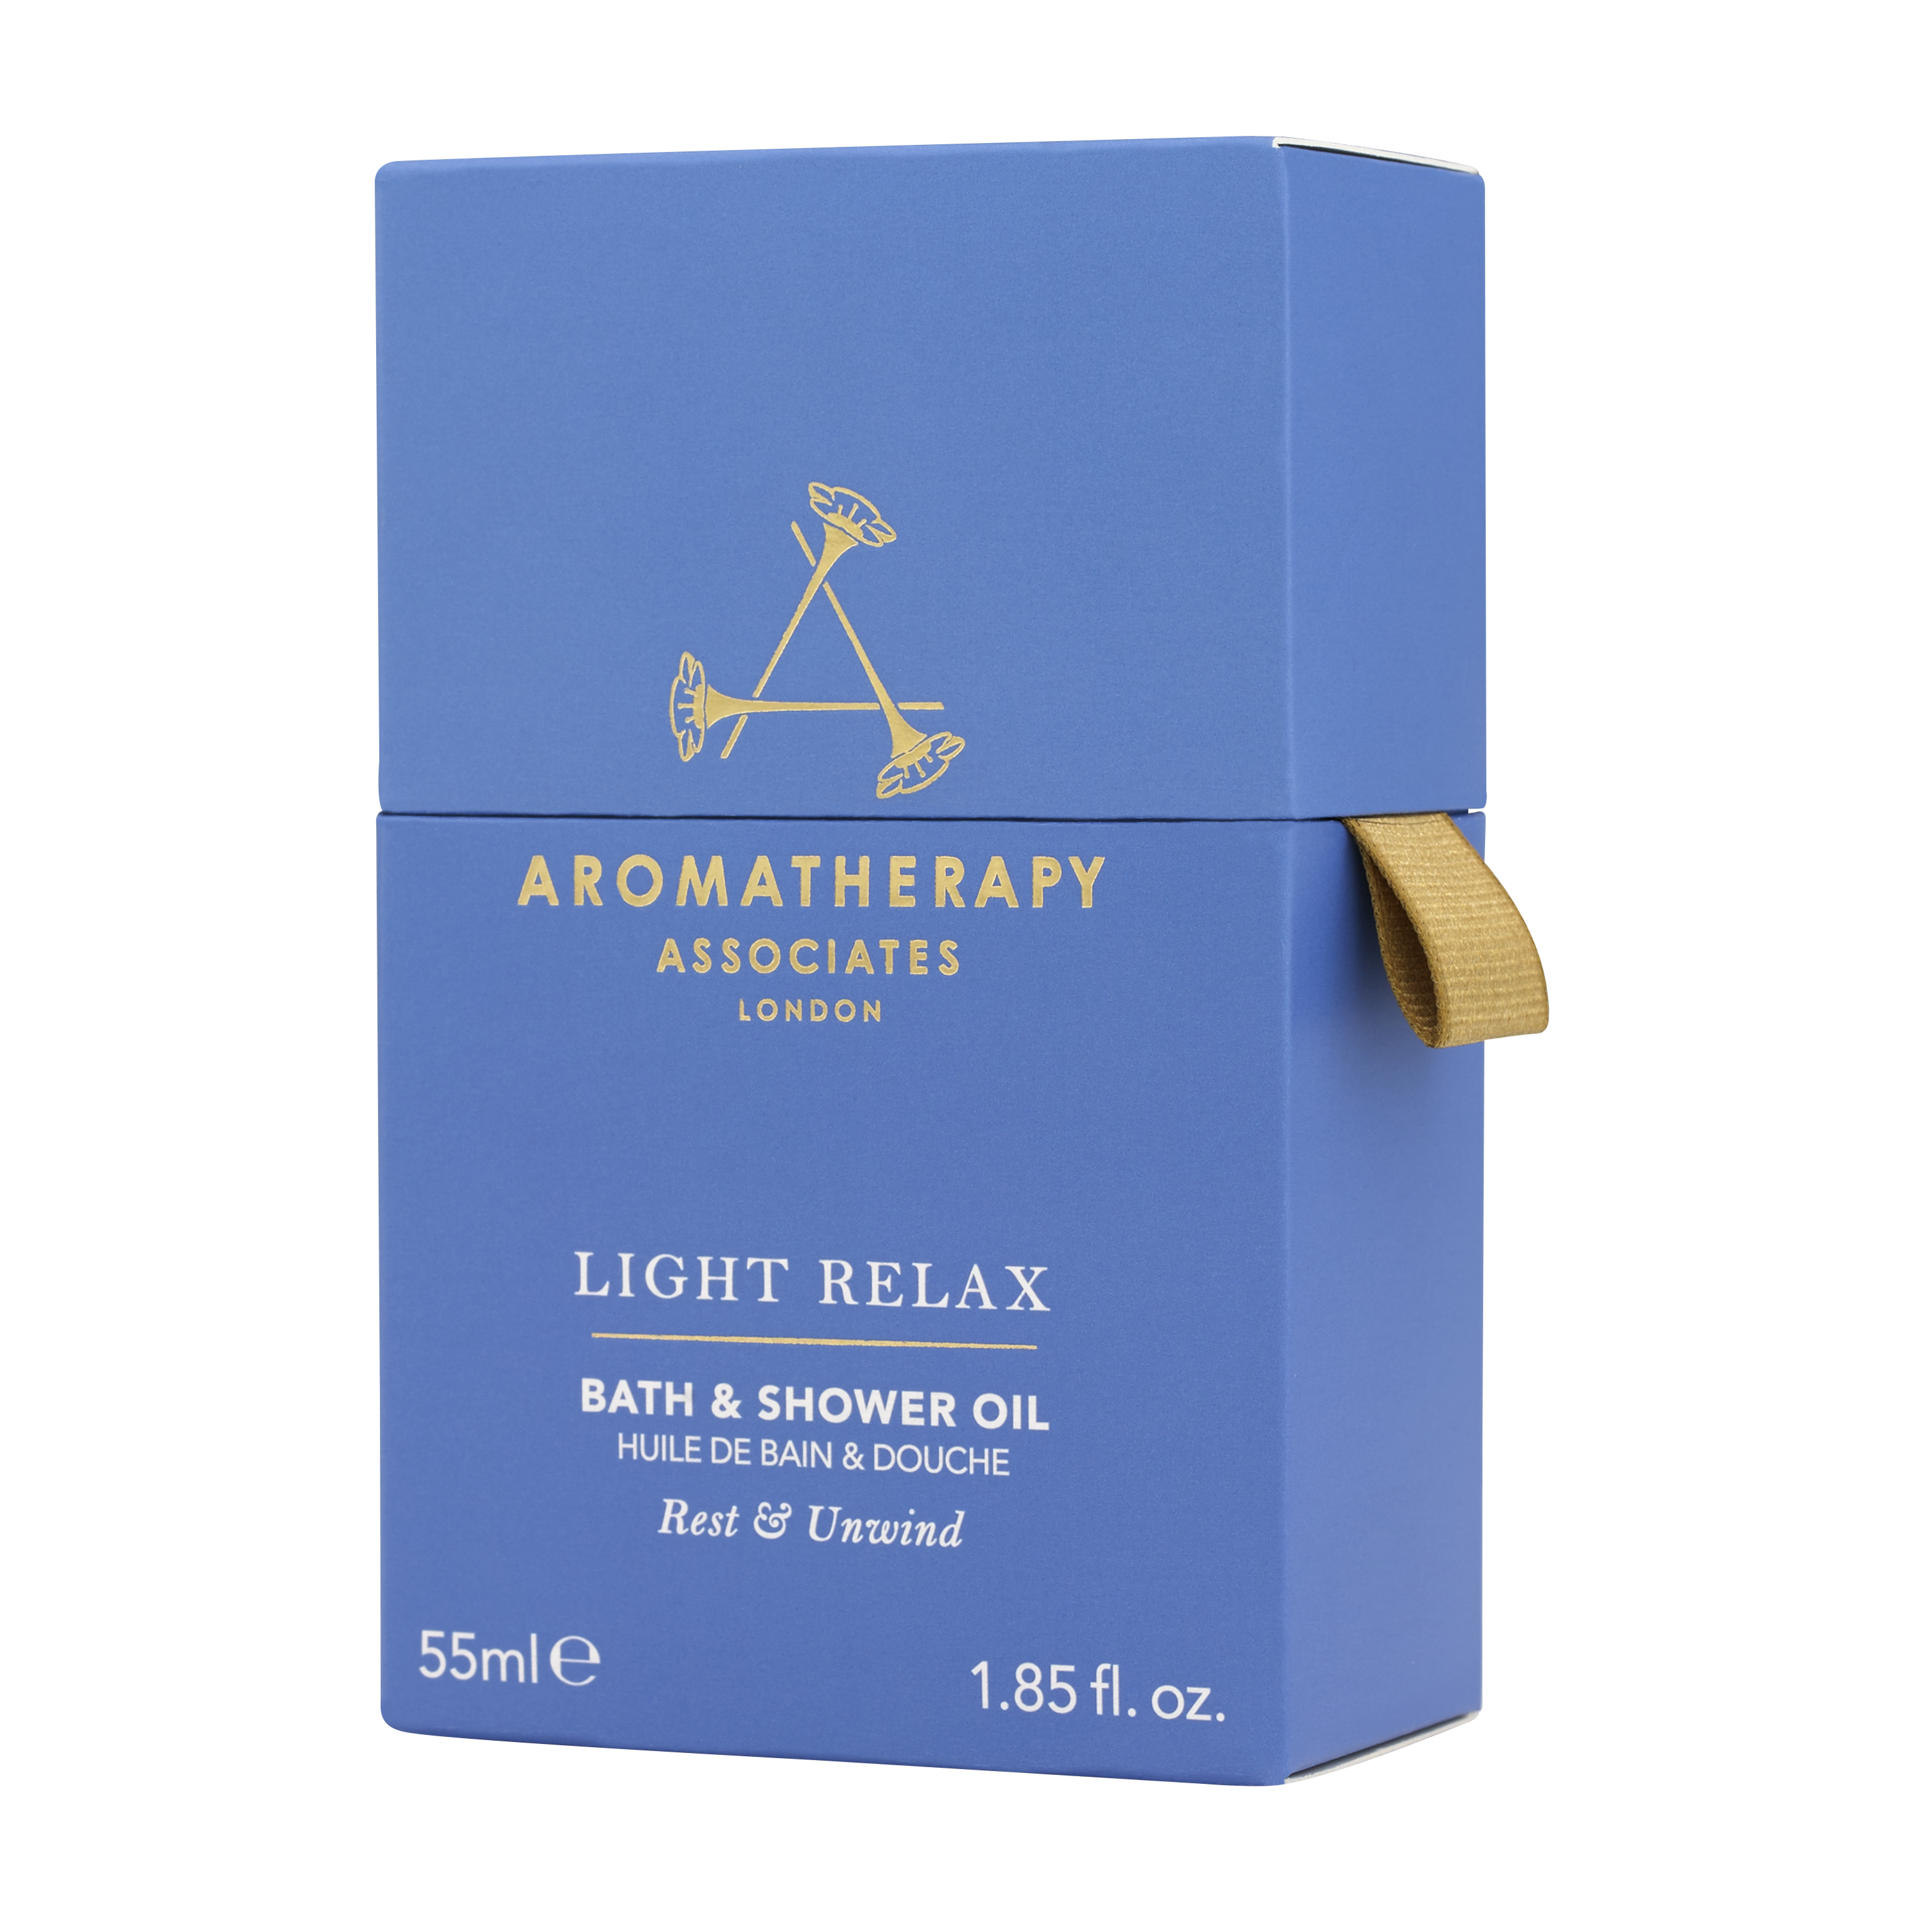 Light Relax Bath & Shower Oil 55ml Aromatherapy Associates